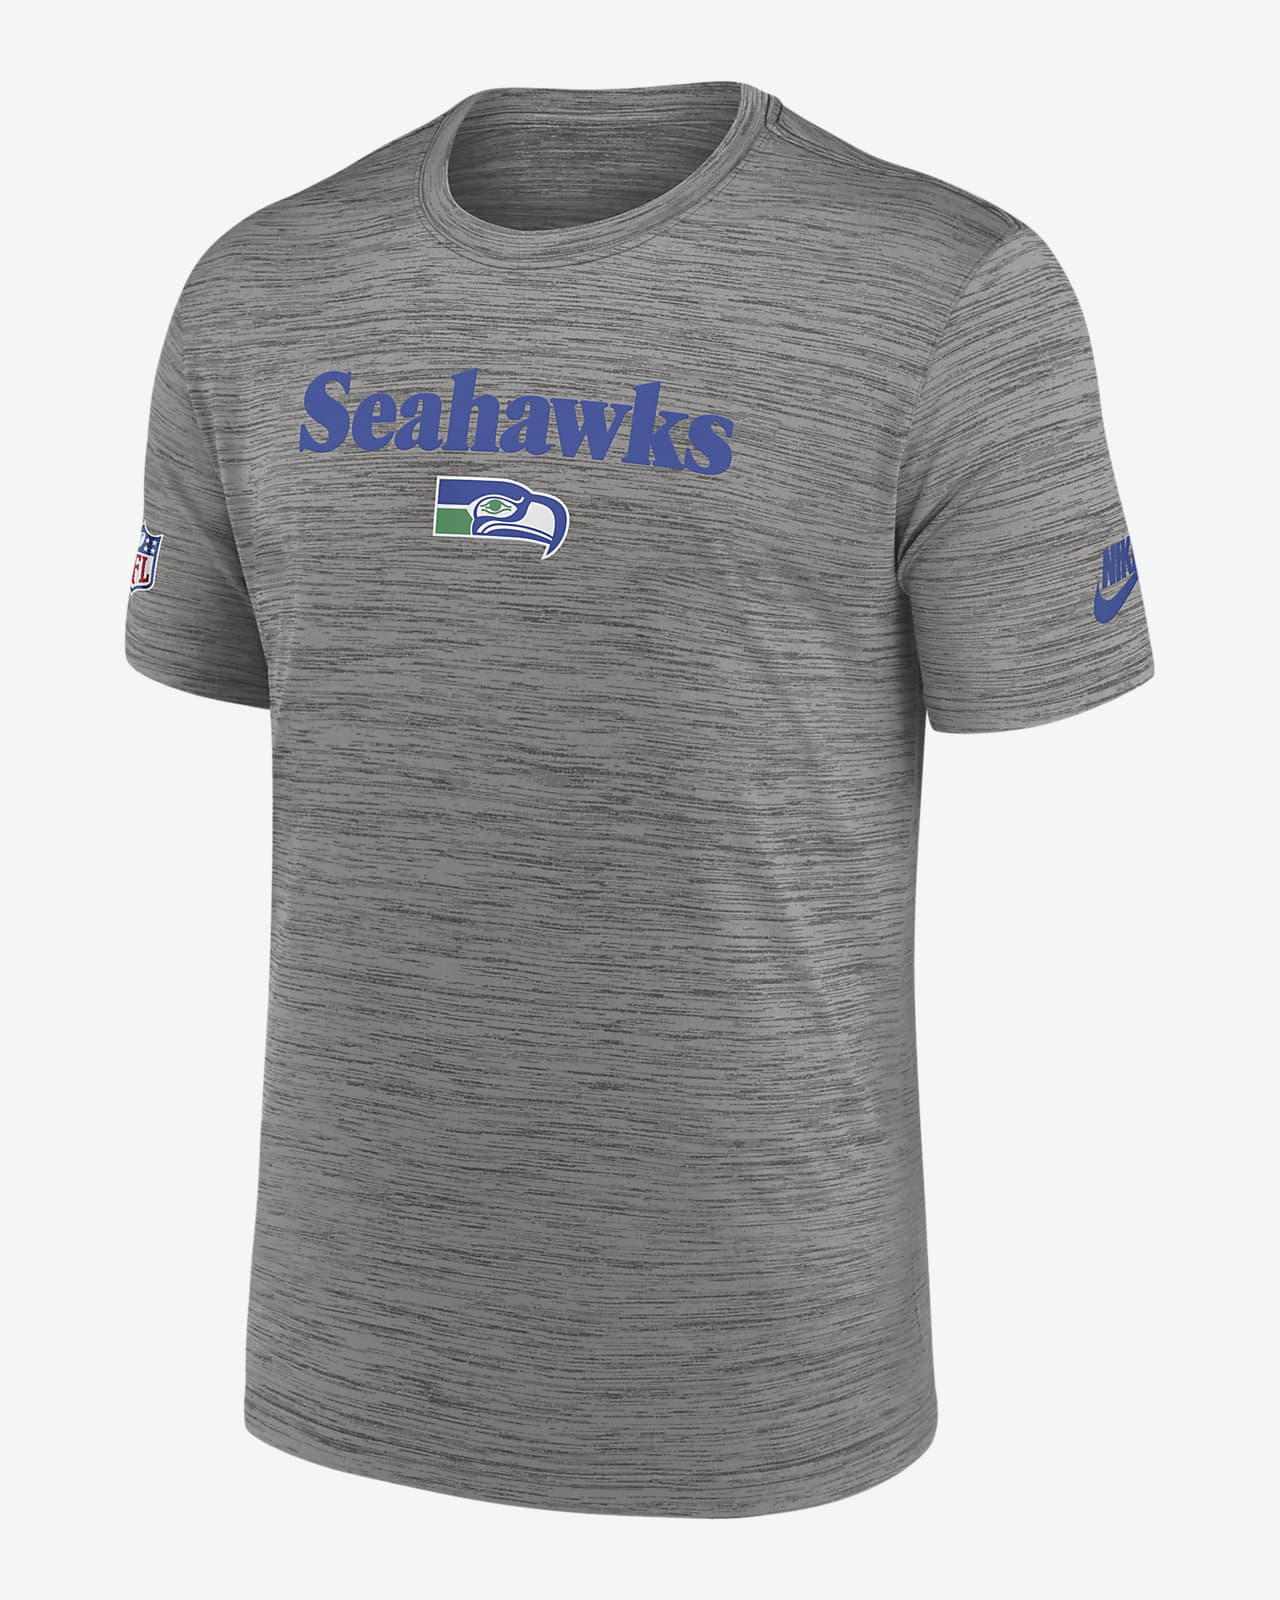 Nike Dri-FIT Team (NFL Seattle Seahawks) Men's T-Shirt